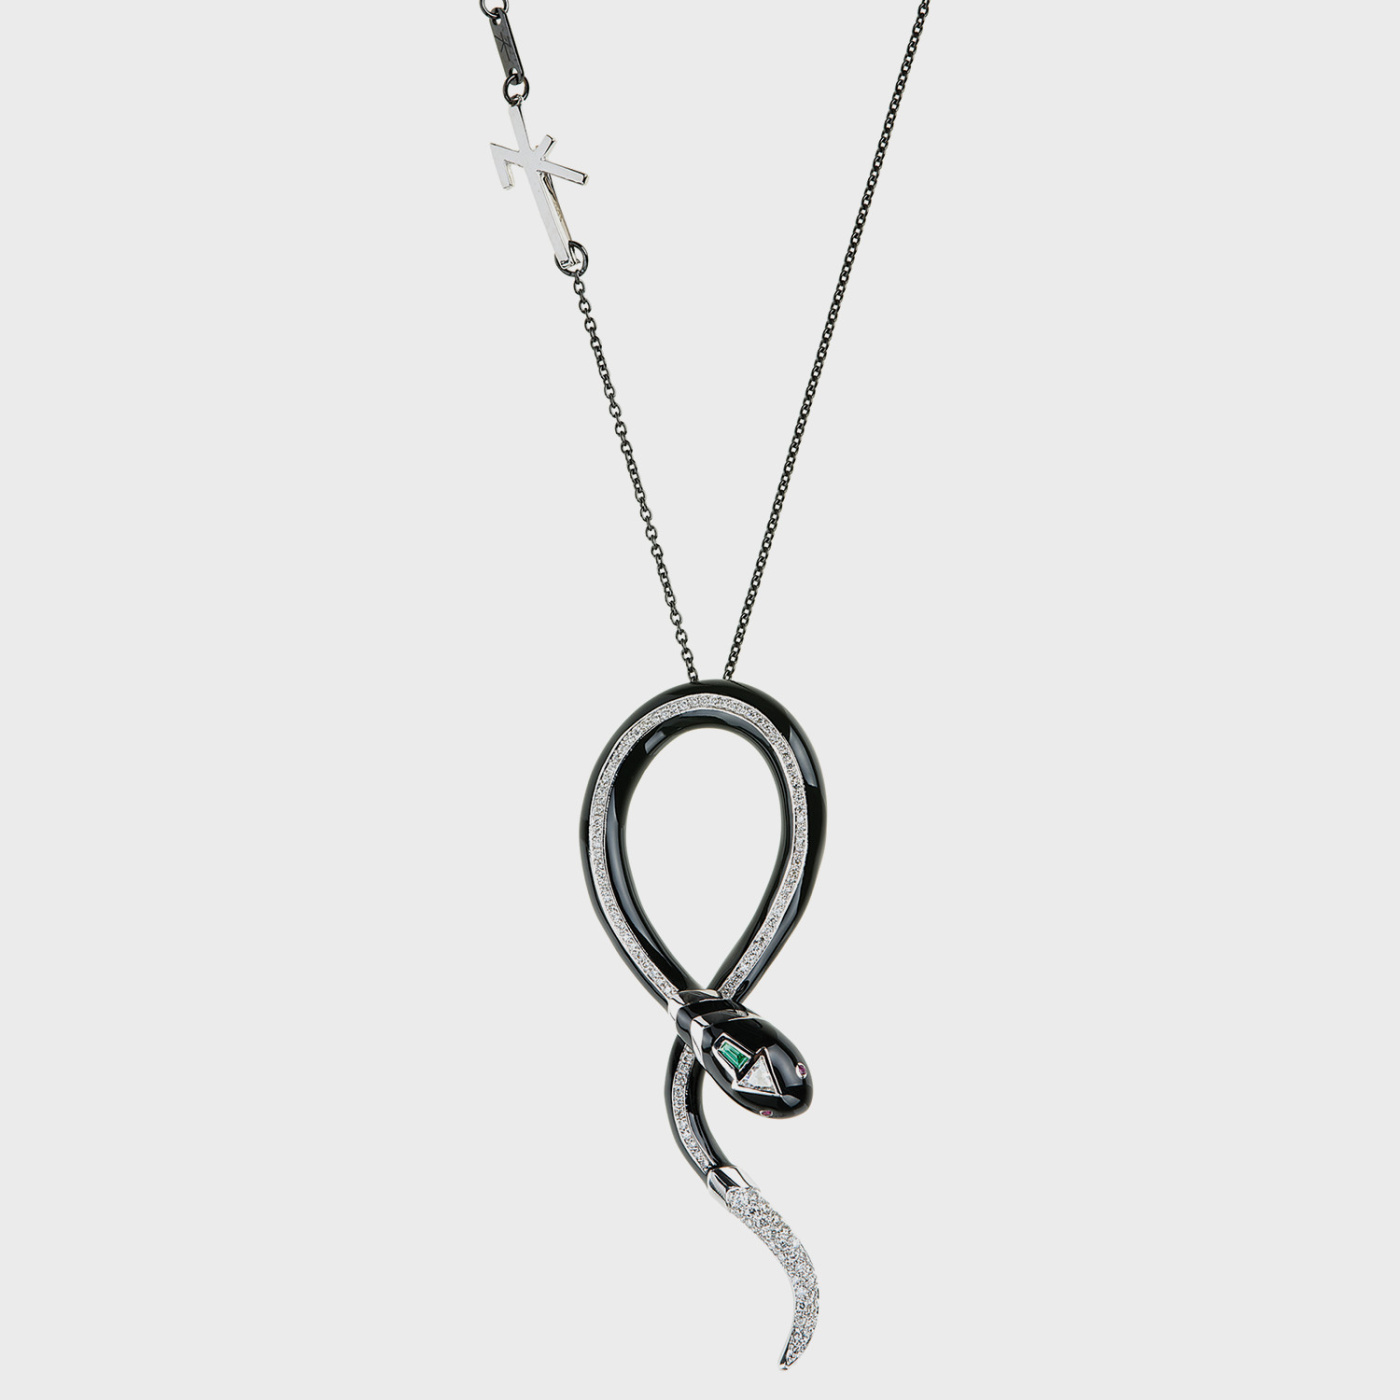 Black gold snake pendant necklace with white diamonds, emerald, ruby and black enamel